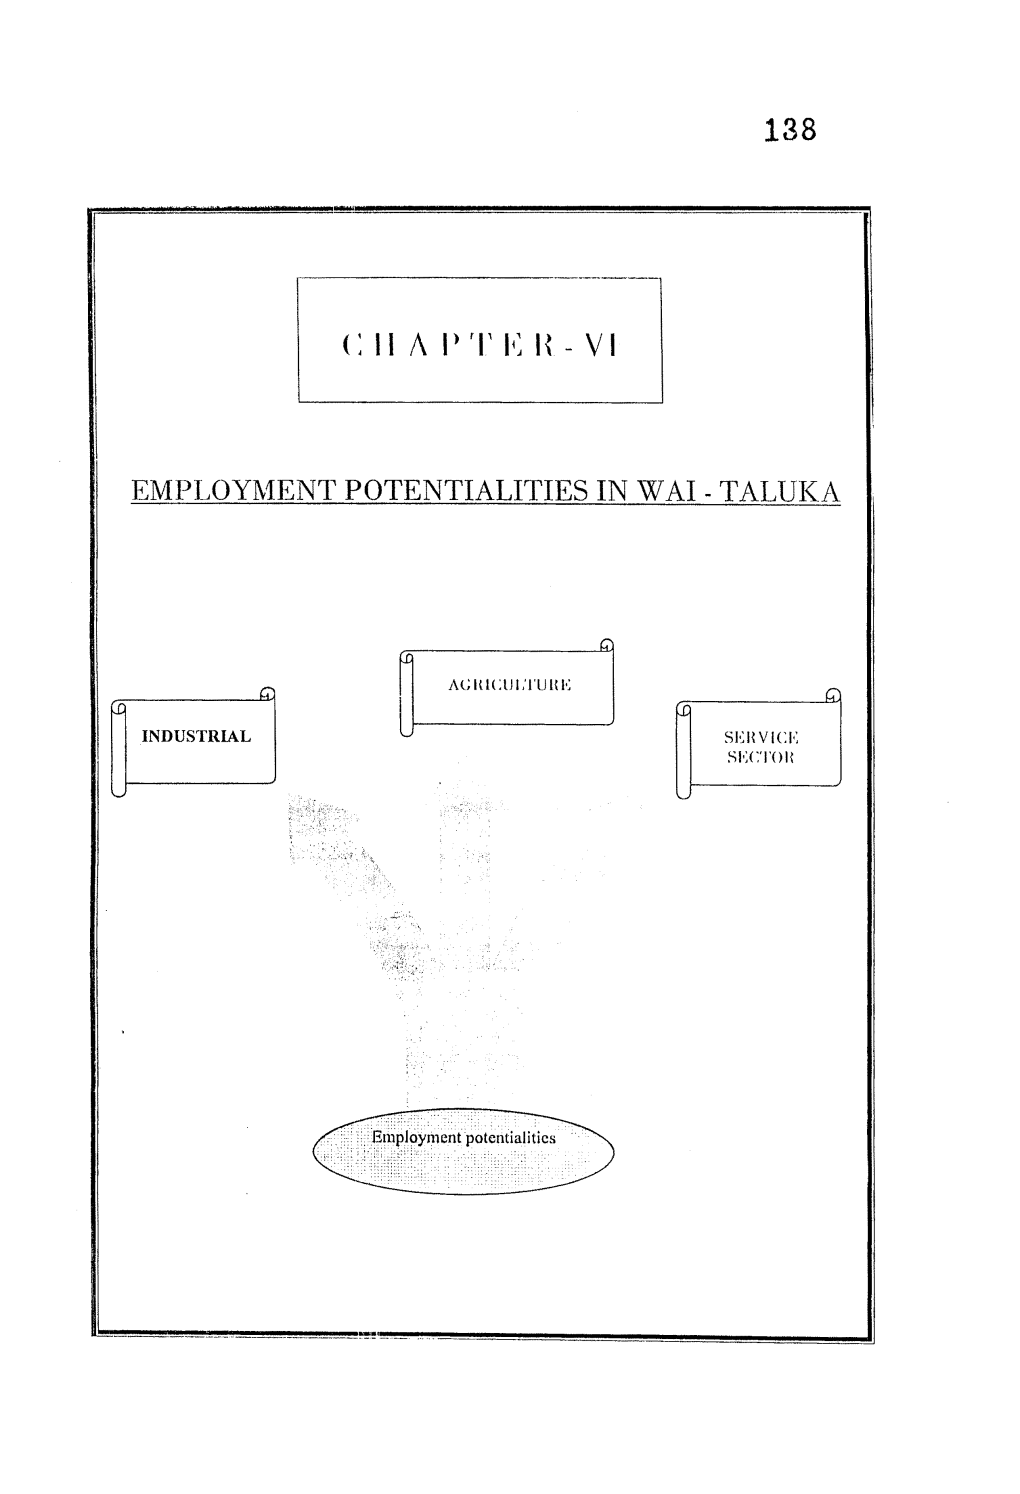 Employment Potentialities in Wai - Taluka